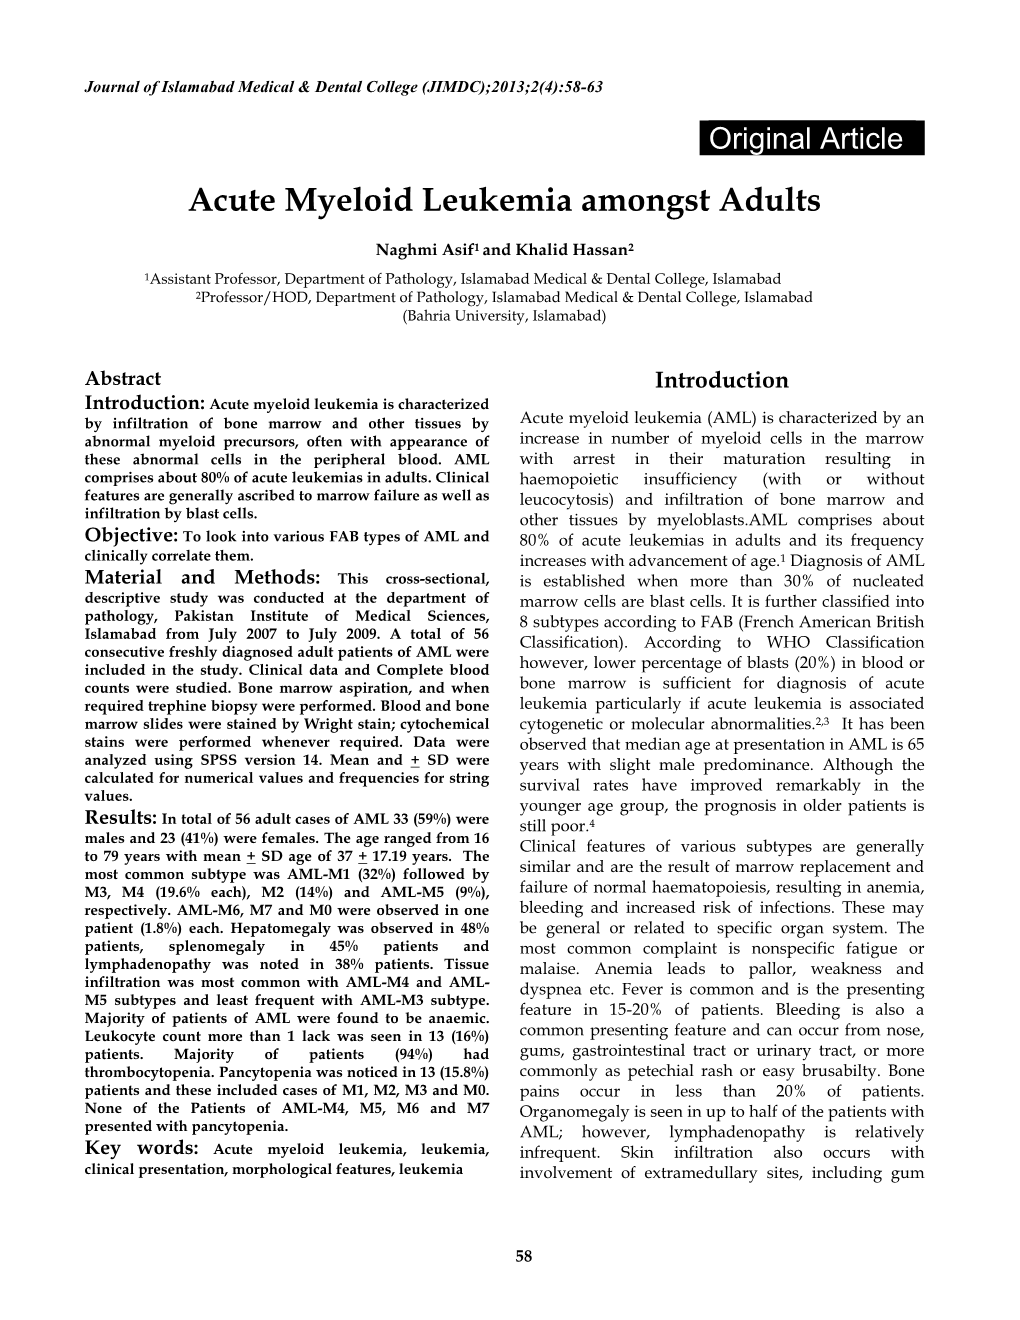 Acute Myeloid Leukemia Amongst Adults